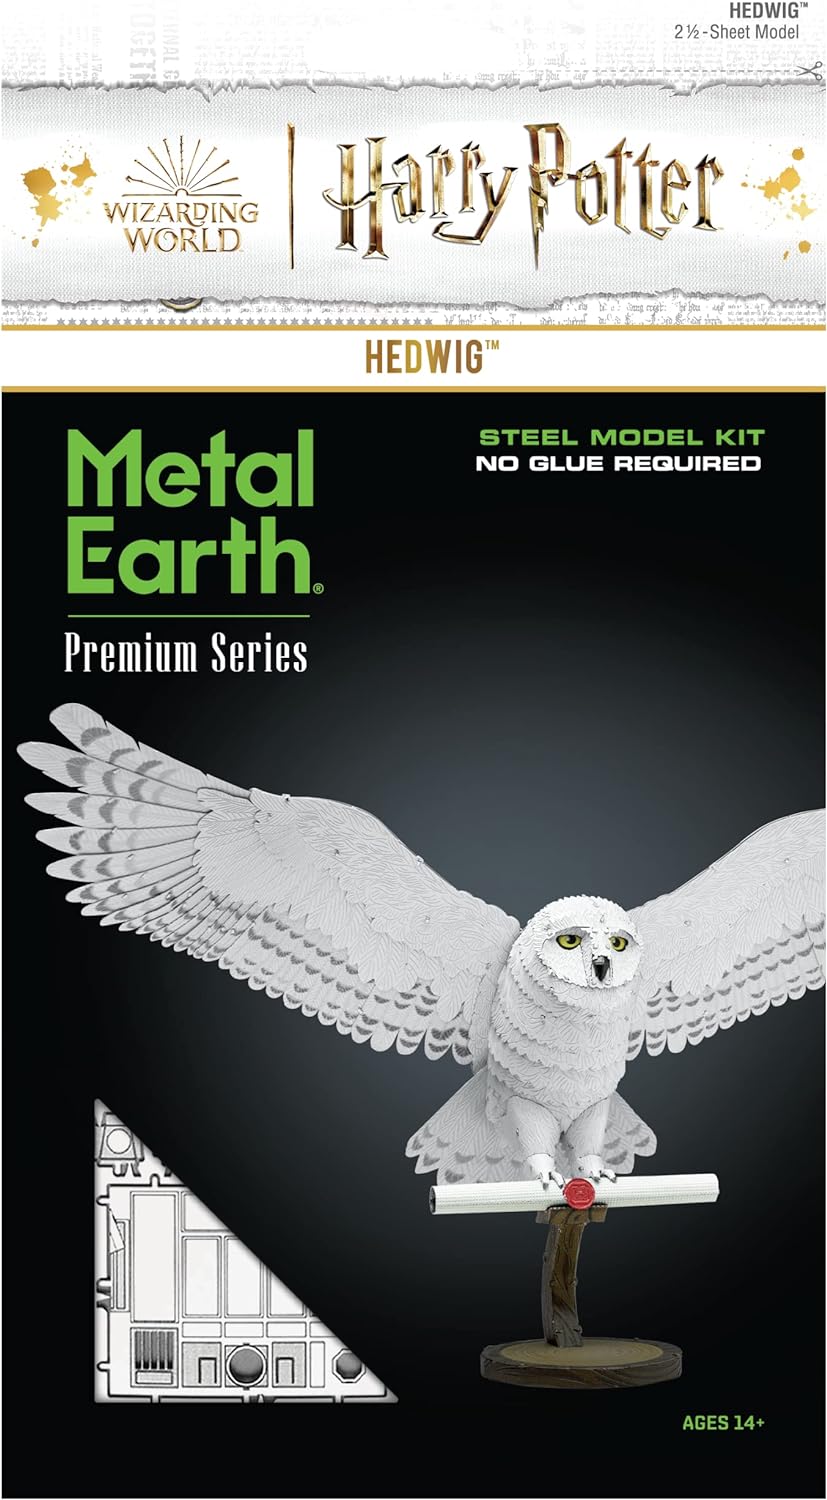 Premium S: Hedwig